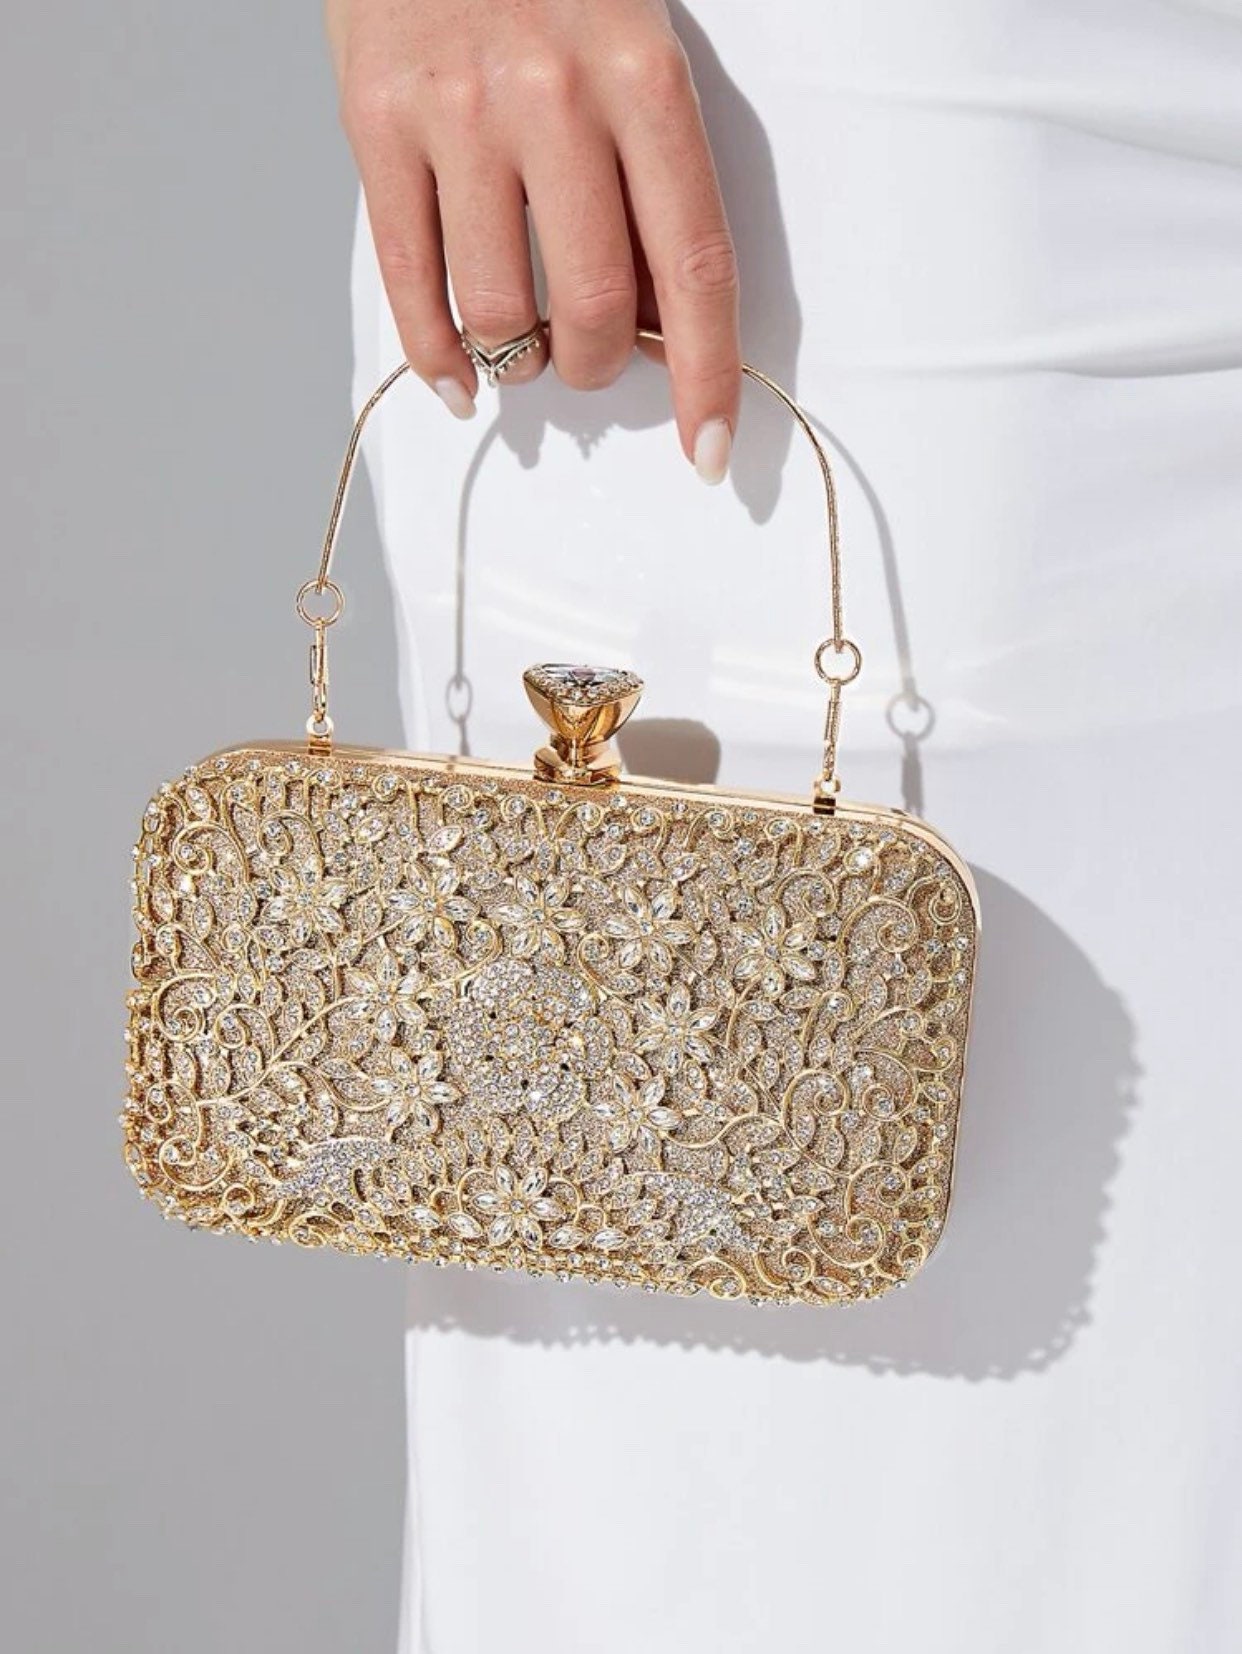 BENCOMOM Women gold clutch Purses Formal Evening Bags Wedding Party Dressy  Handbags Bridal Prom shoulder bag with chain